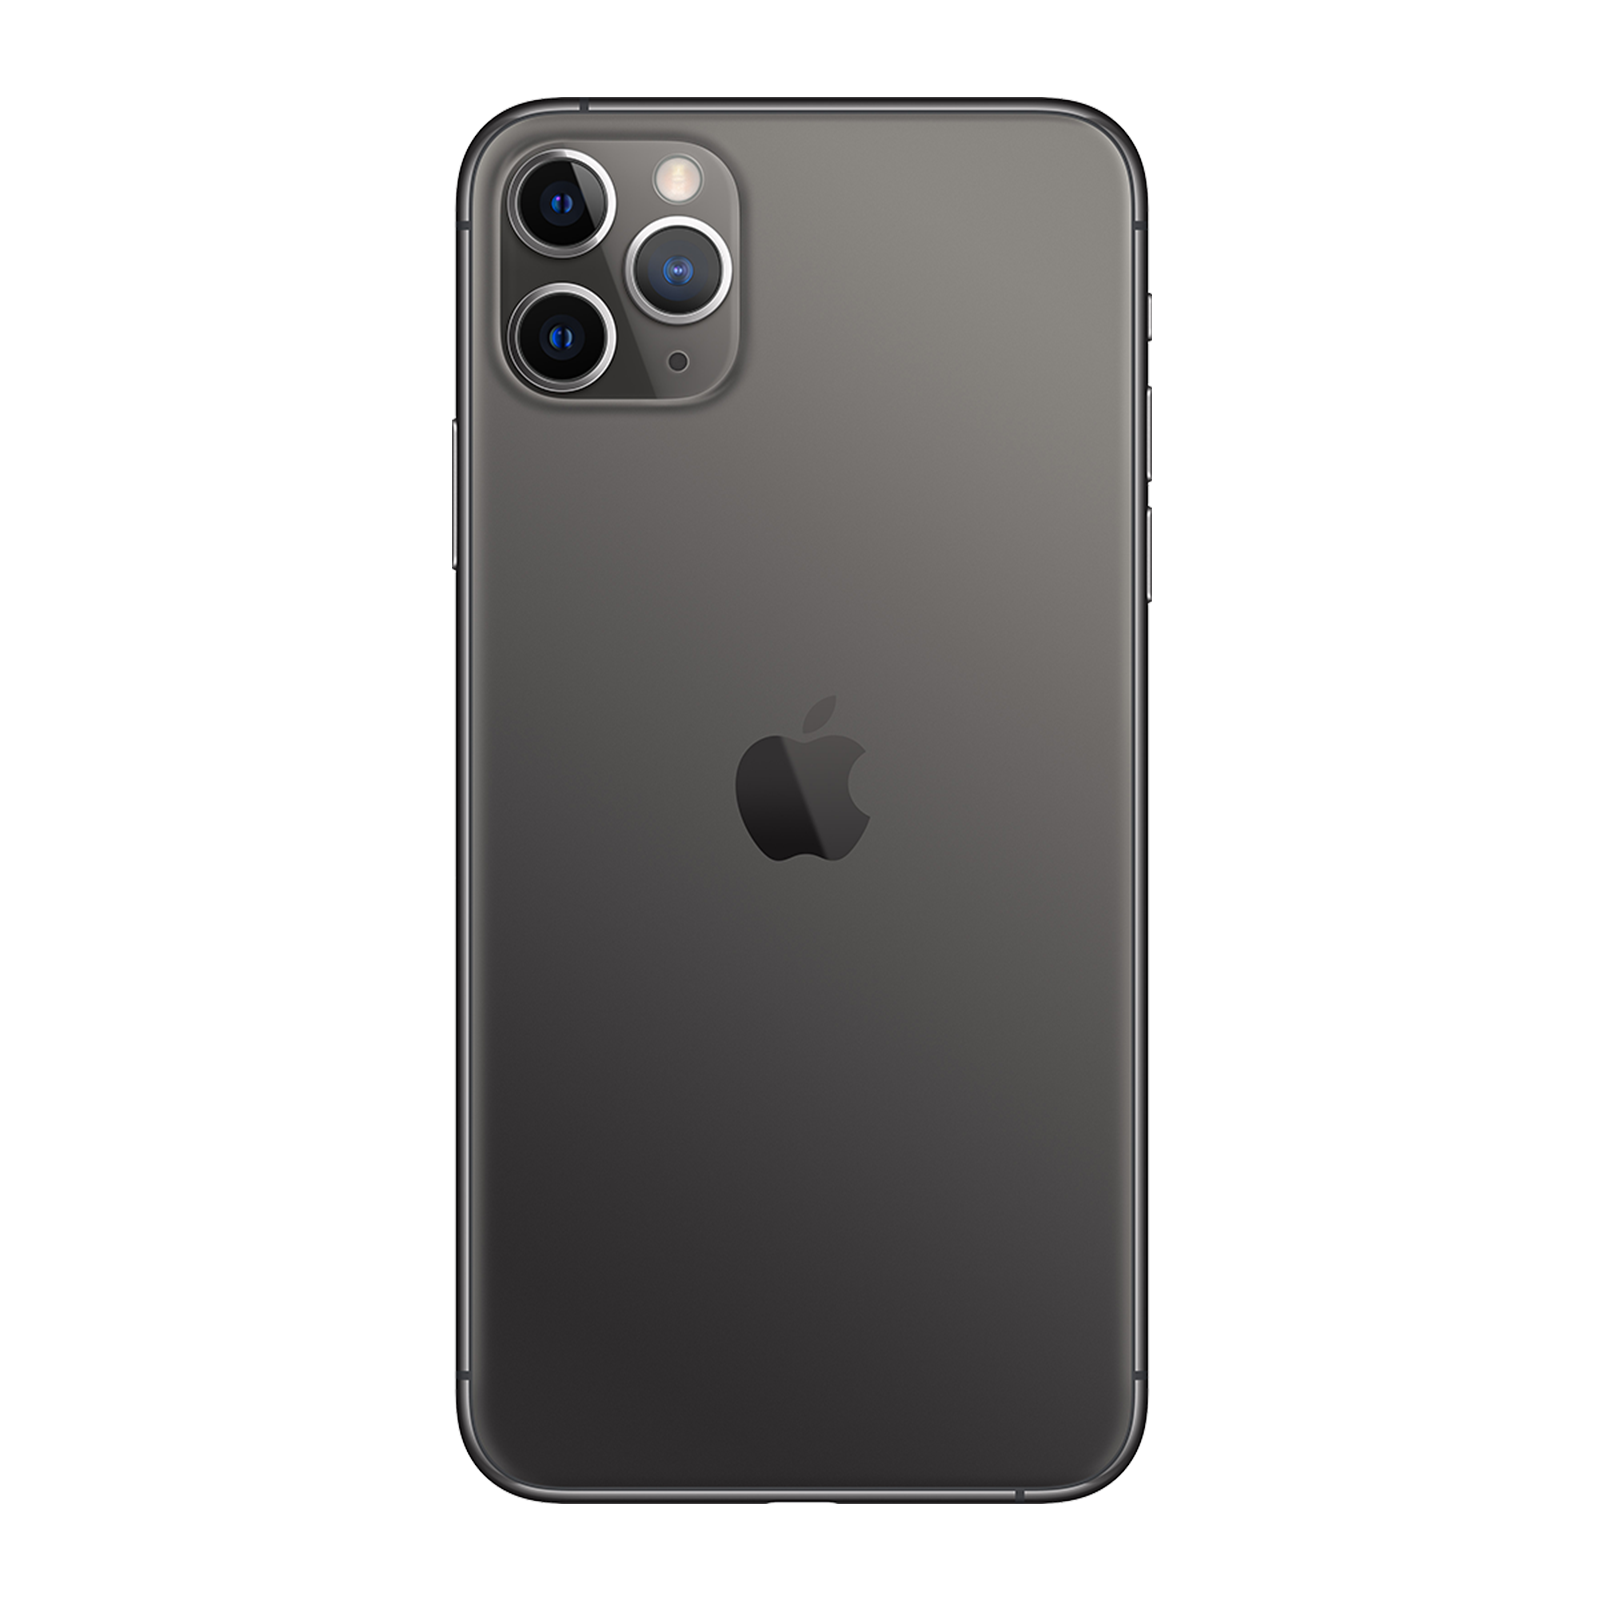 Apple iPhone 11 Pro Max 256GB Space Grey Fair - Unlocked